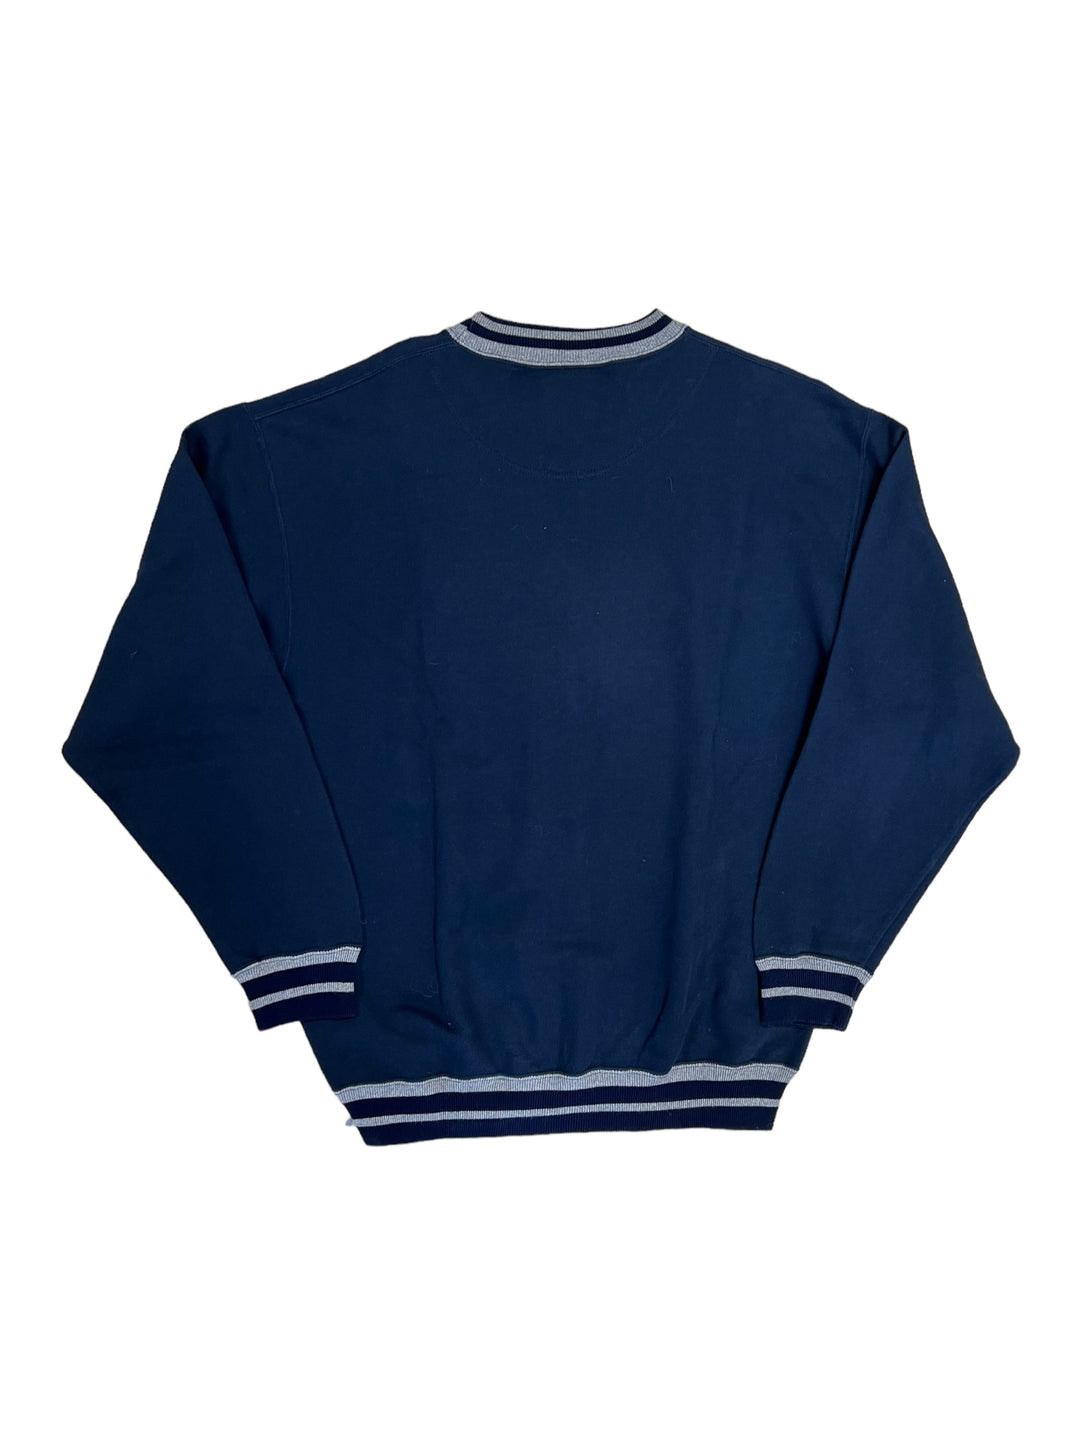 Vintage embroidery tropical regatta navy sweatshirt men’s Extra Large